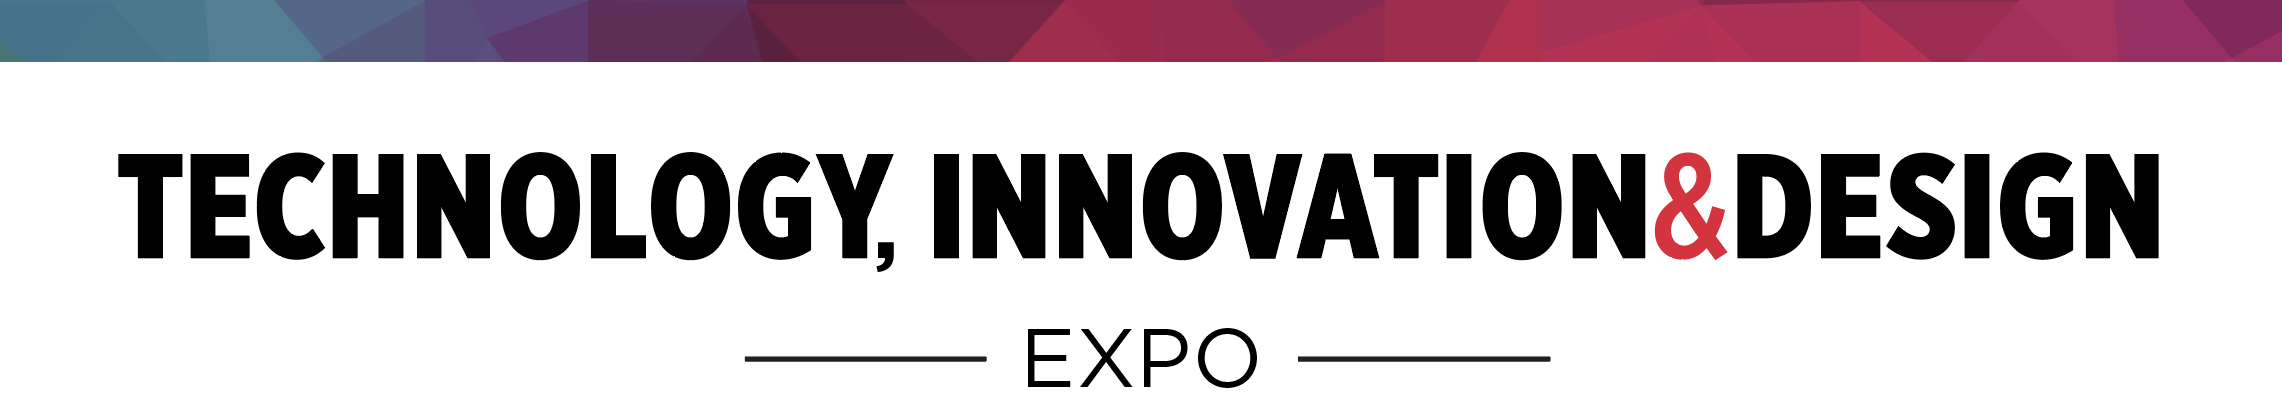 Technology, Innovation & Design Expo